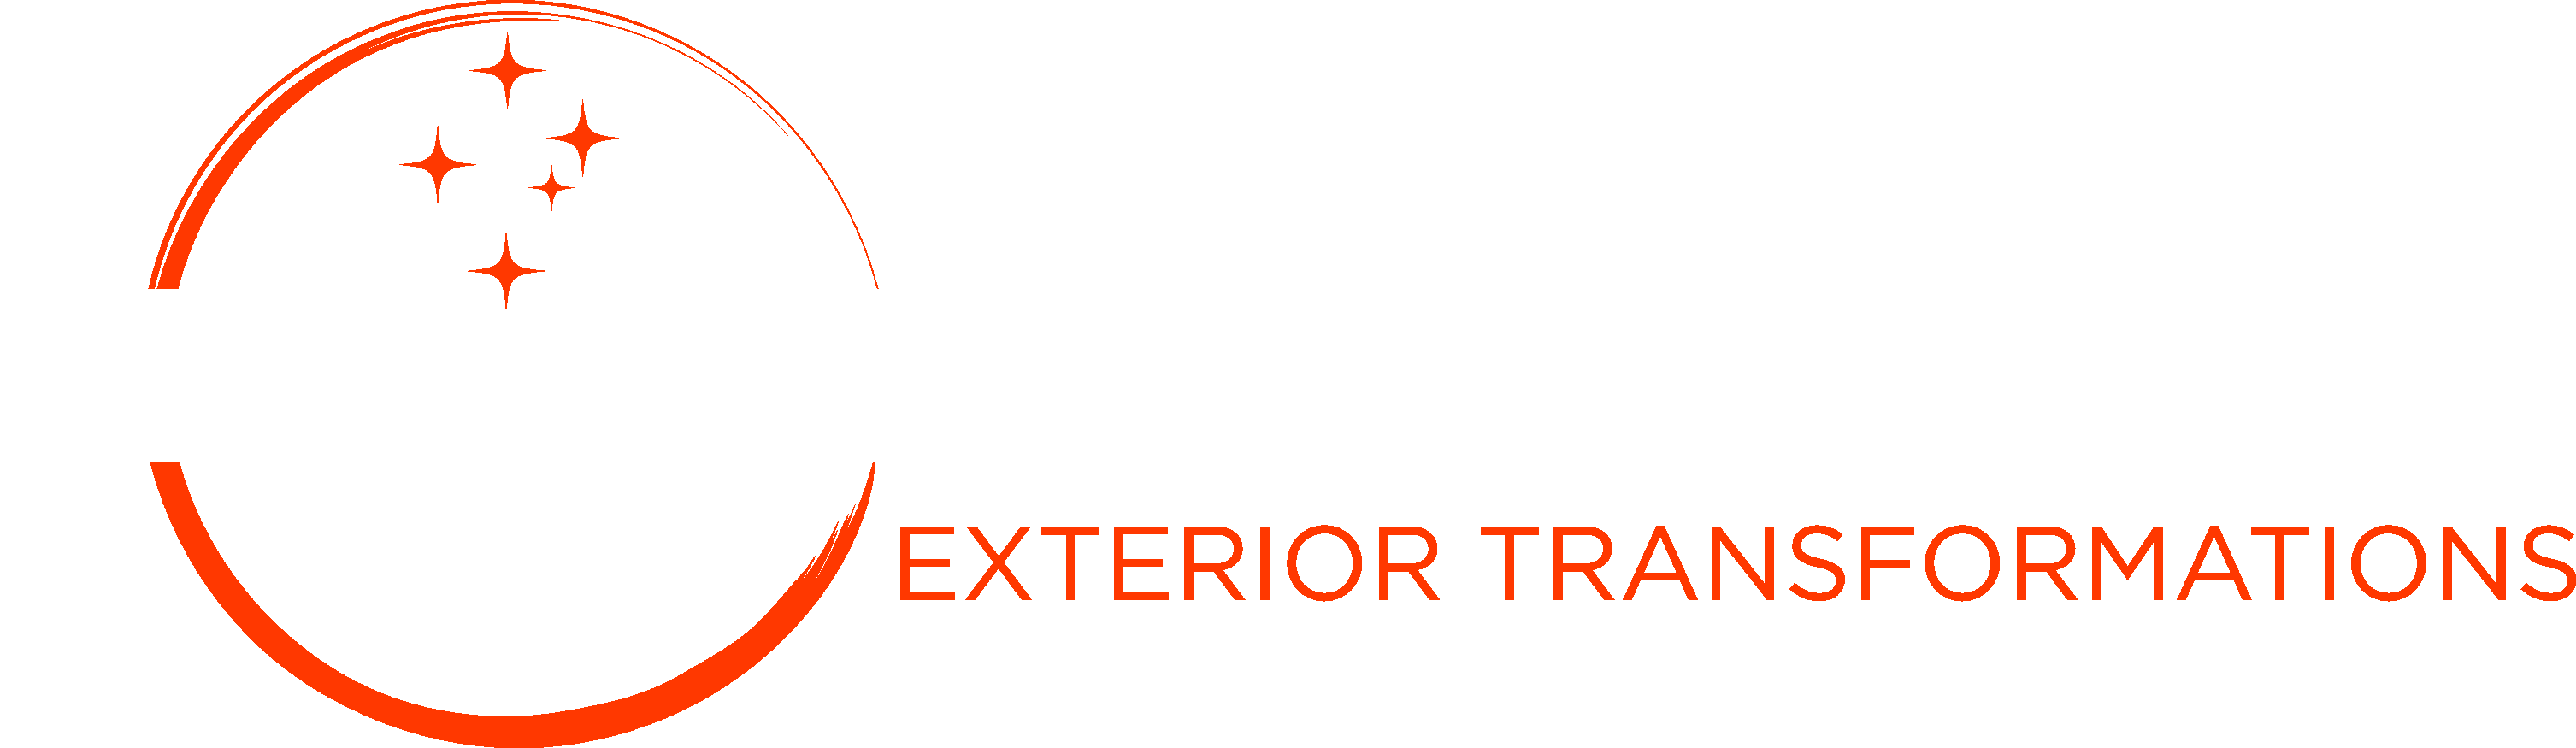 Auscape Exterior Transformations Logo